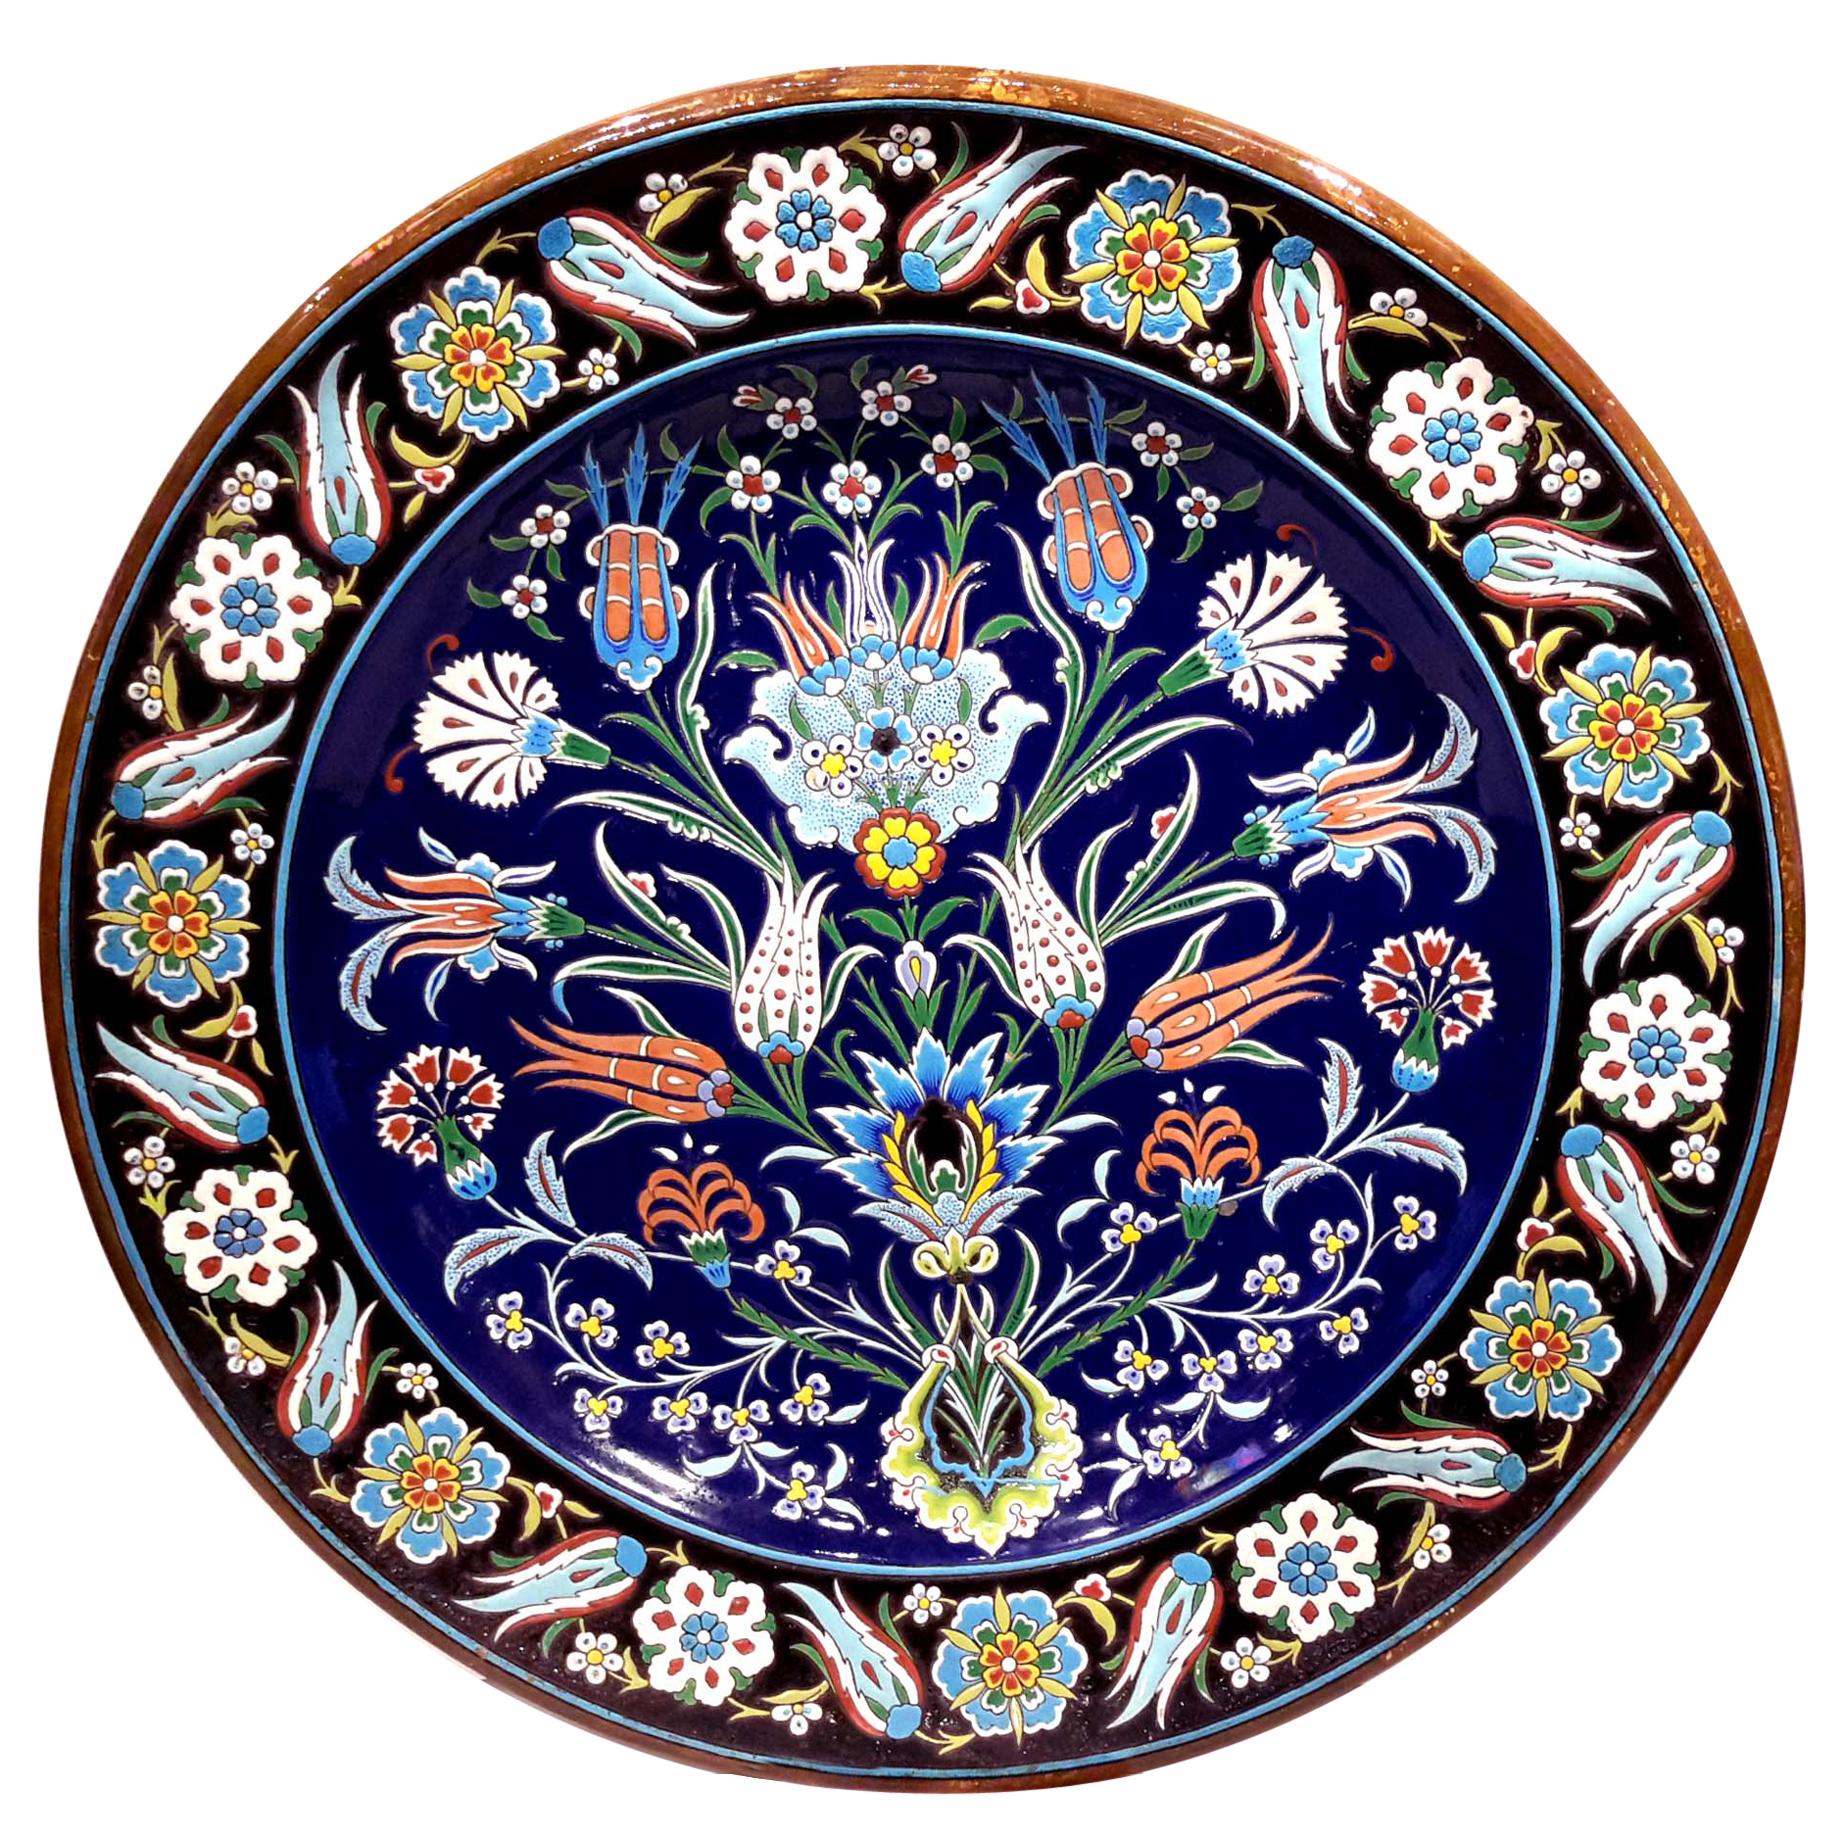 Large 19th Century Privillee Ceramic Charger in Iznik Taste